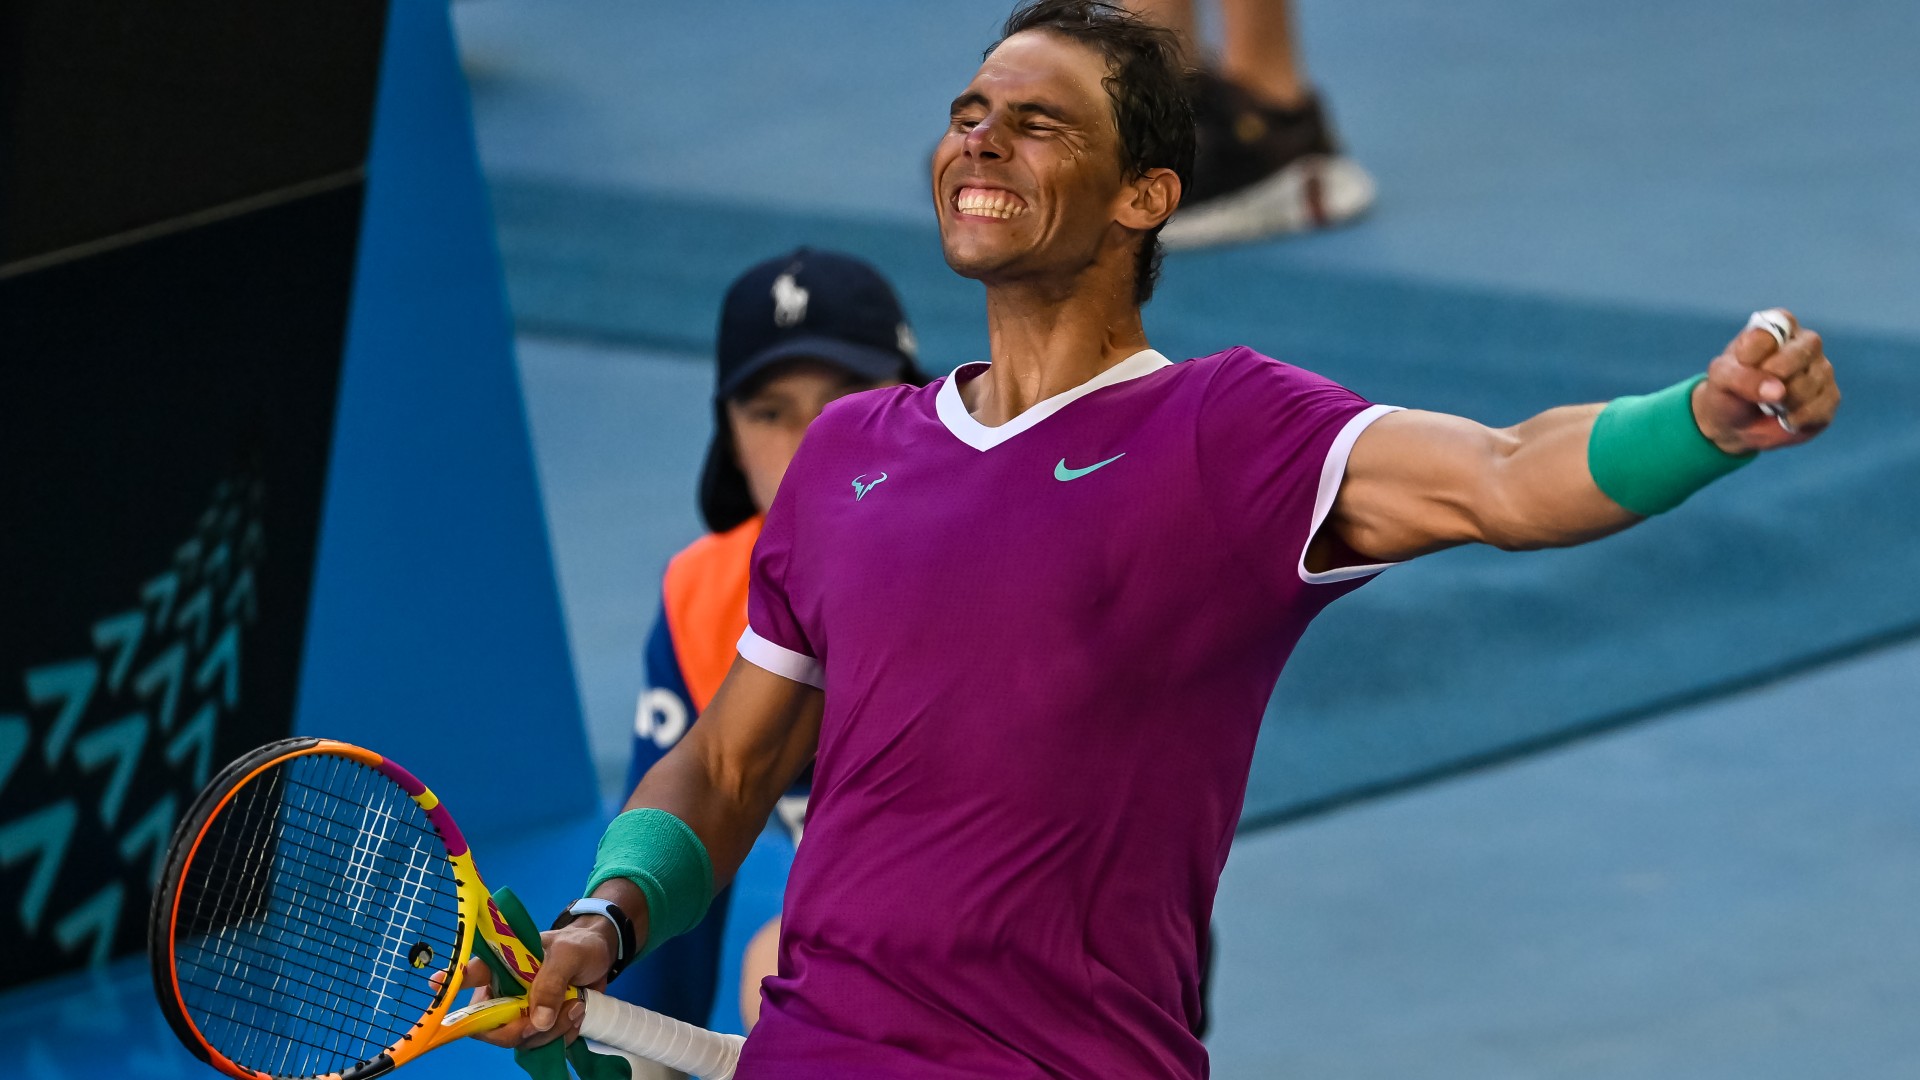 Australian Open 2022 Rafael Nadal has great chance to get ahead in GOAT debate